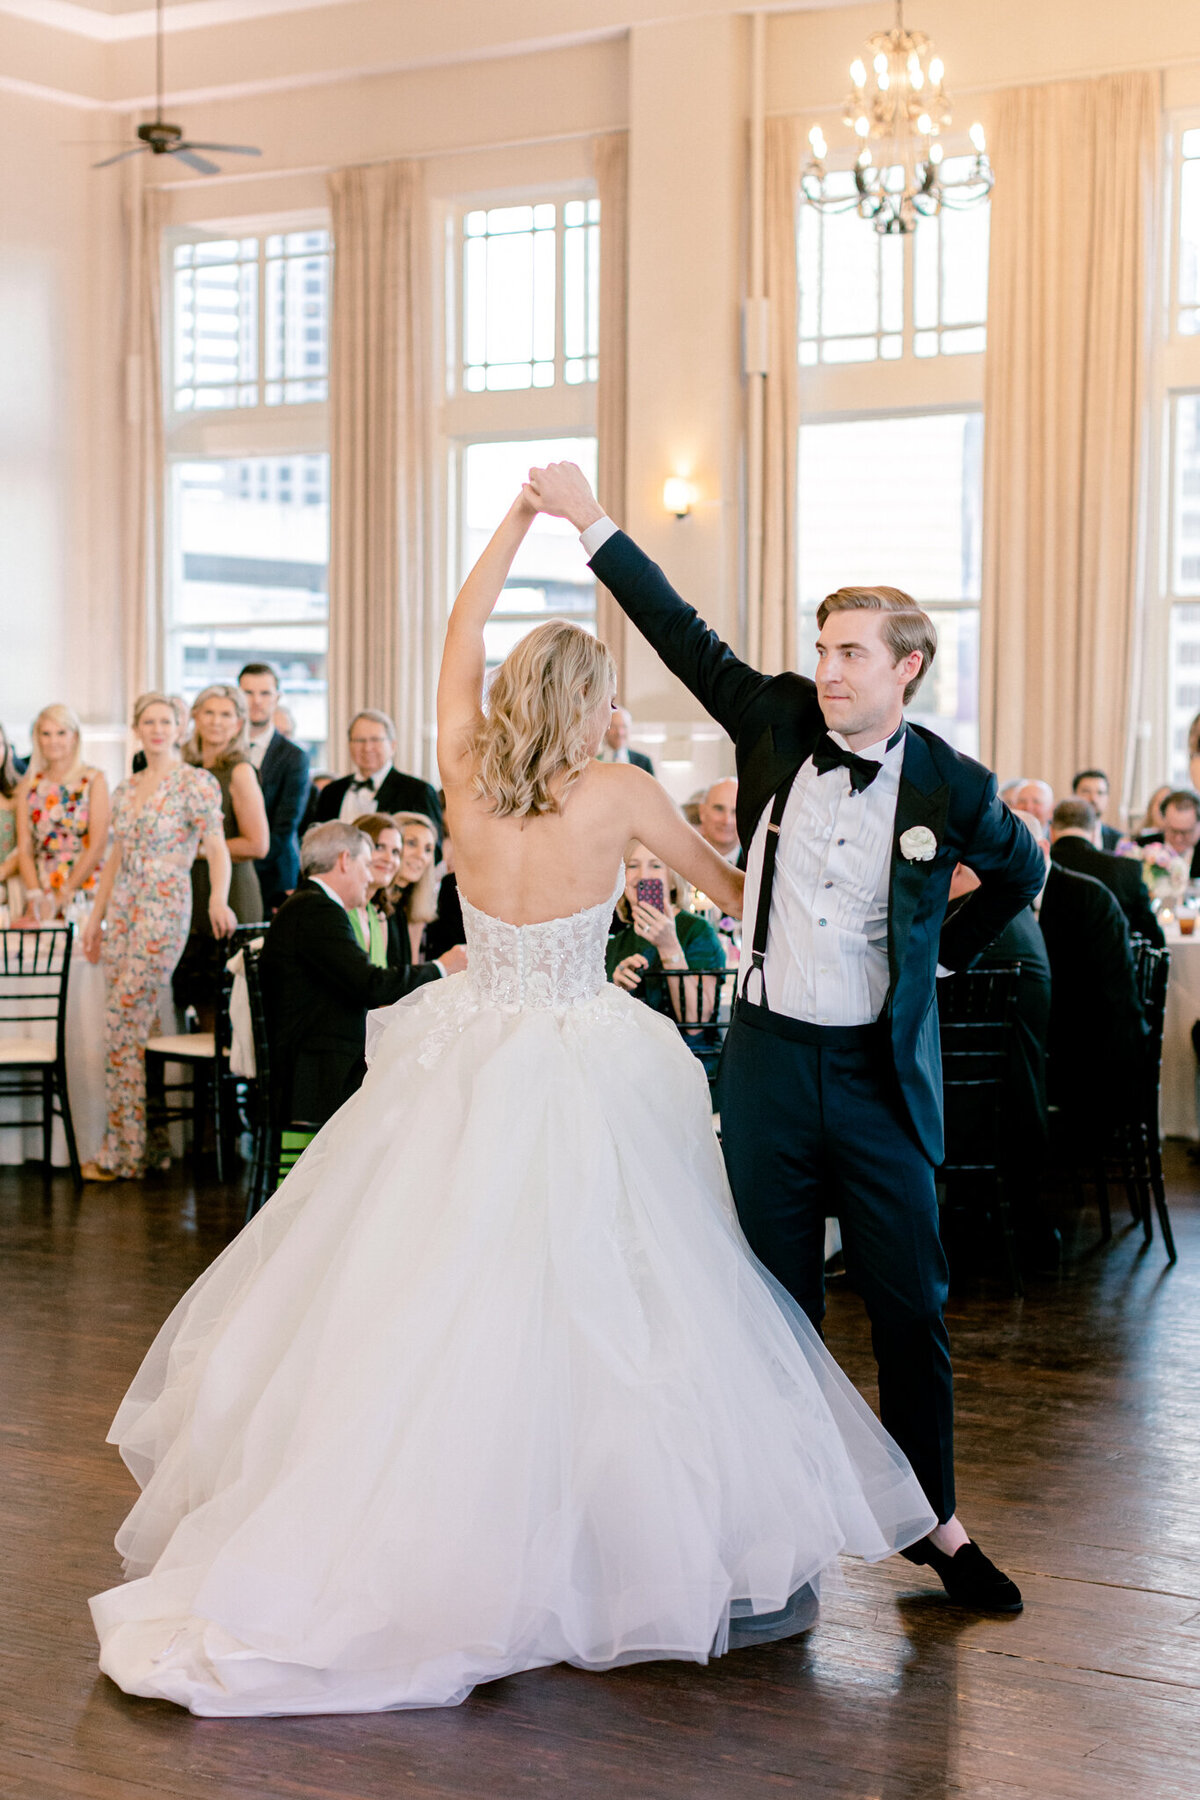 Shelby & Thomas's Wedding at HPUMC The Room on Main | Dallas Wedding Photographer | Sami Kathryn Photography-190